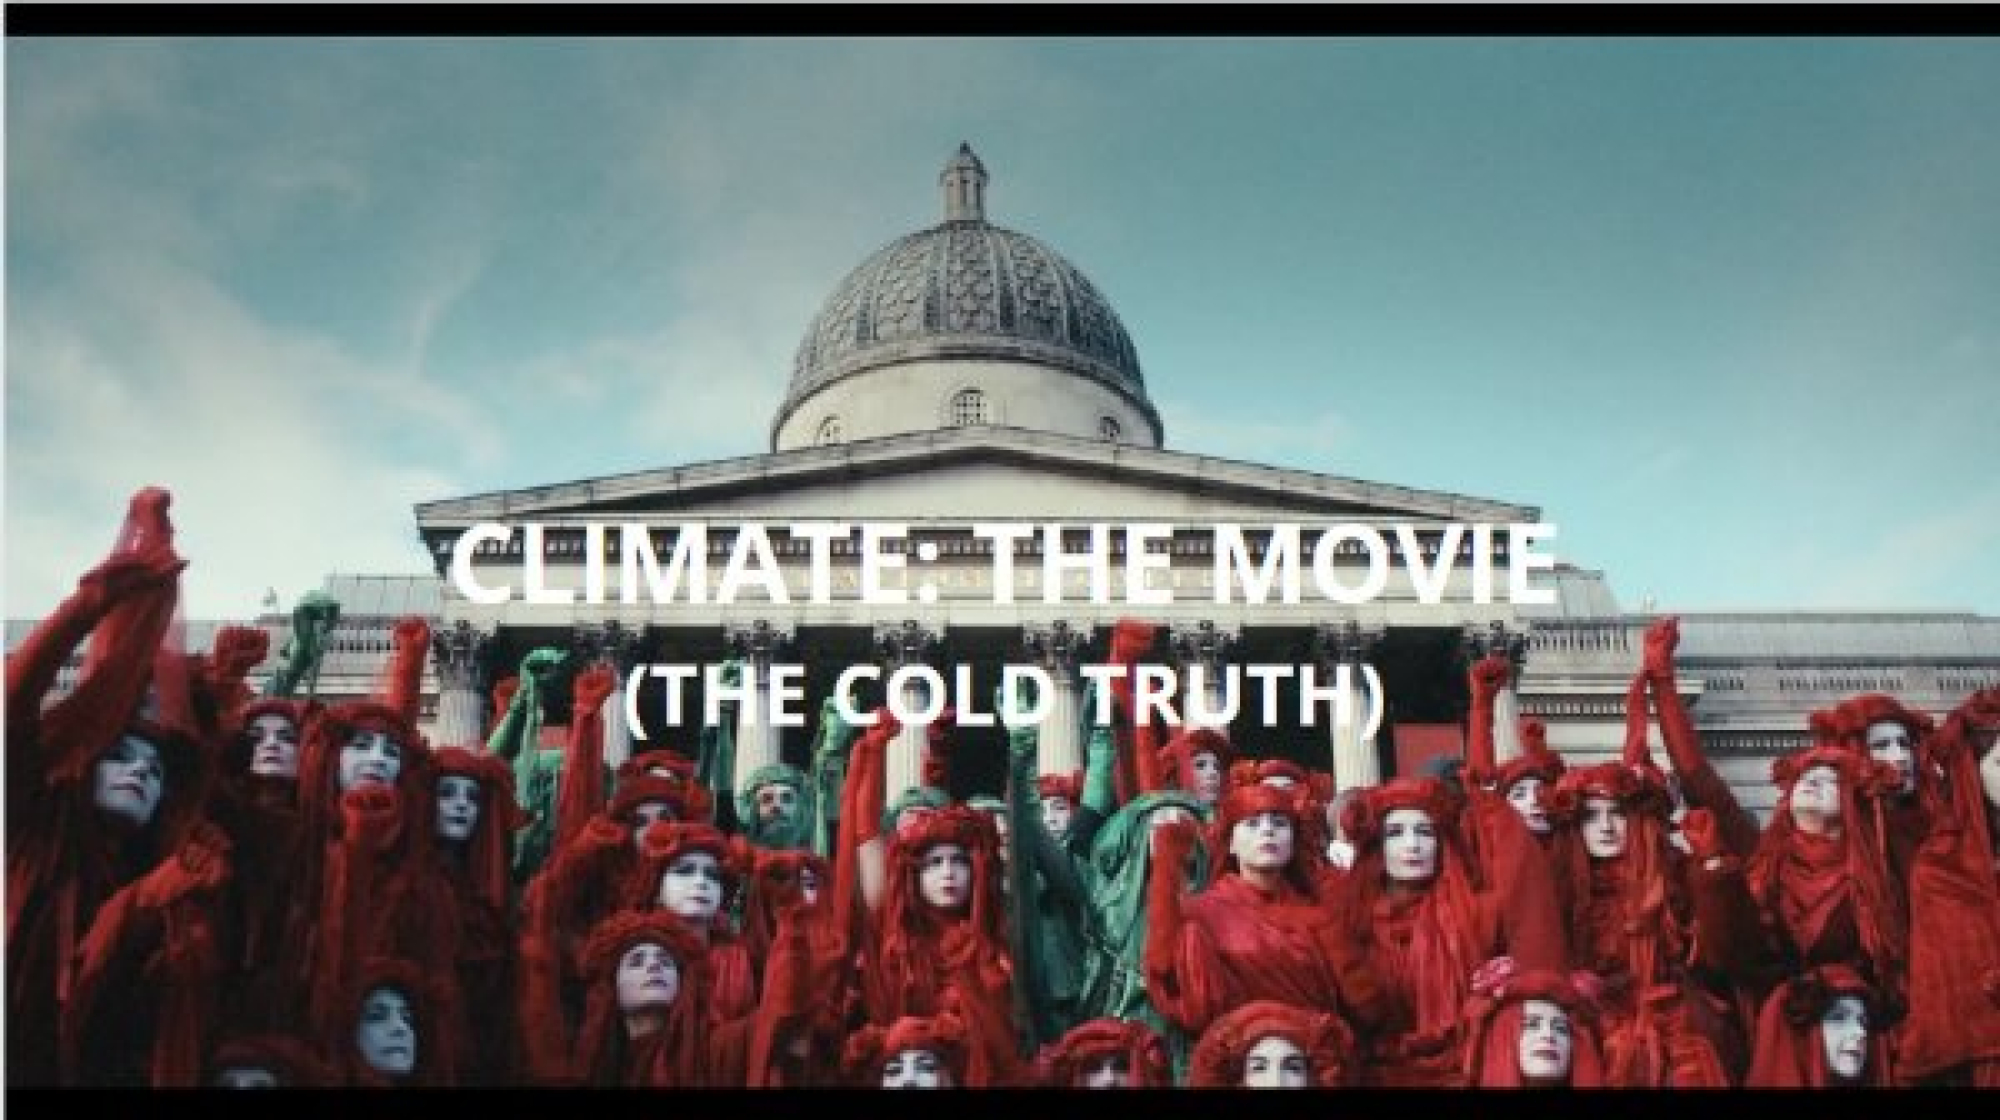 Filmpremière Climate: The Movie groot succes